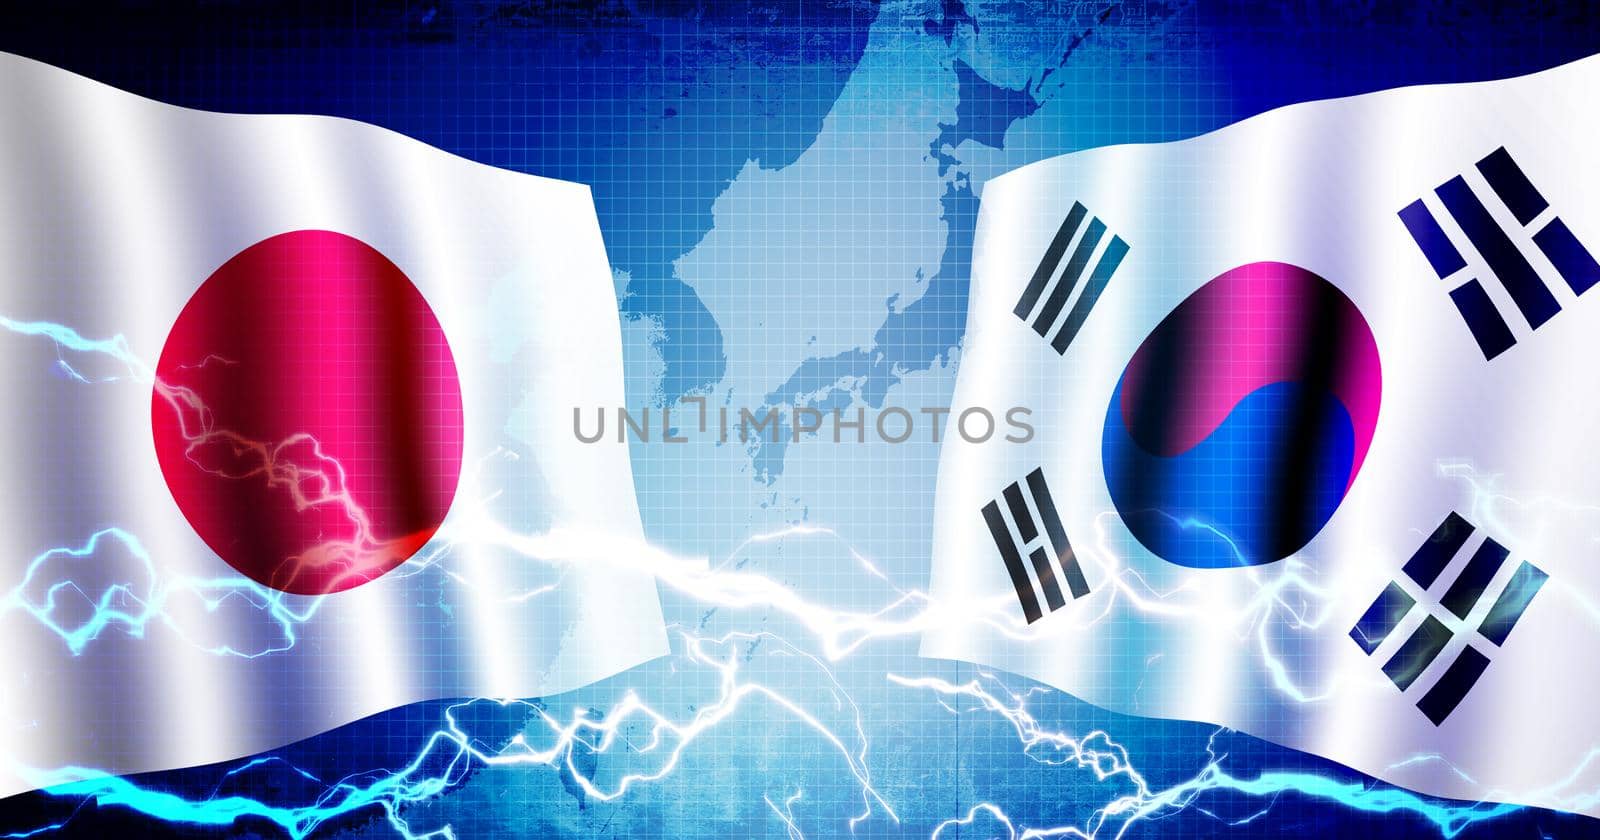 Political confrontation between South korea and Japan / web banner background illustration by barks